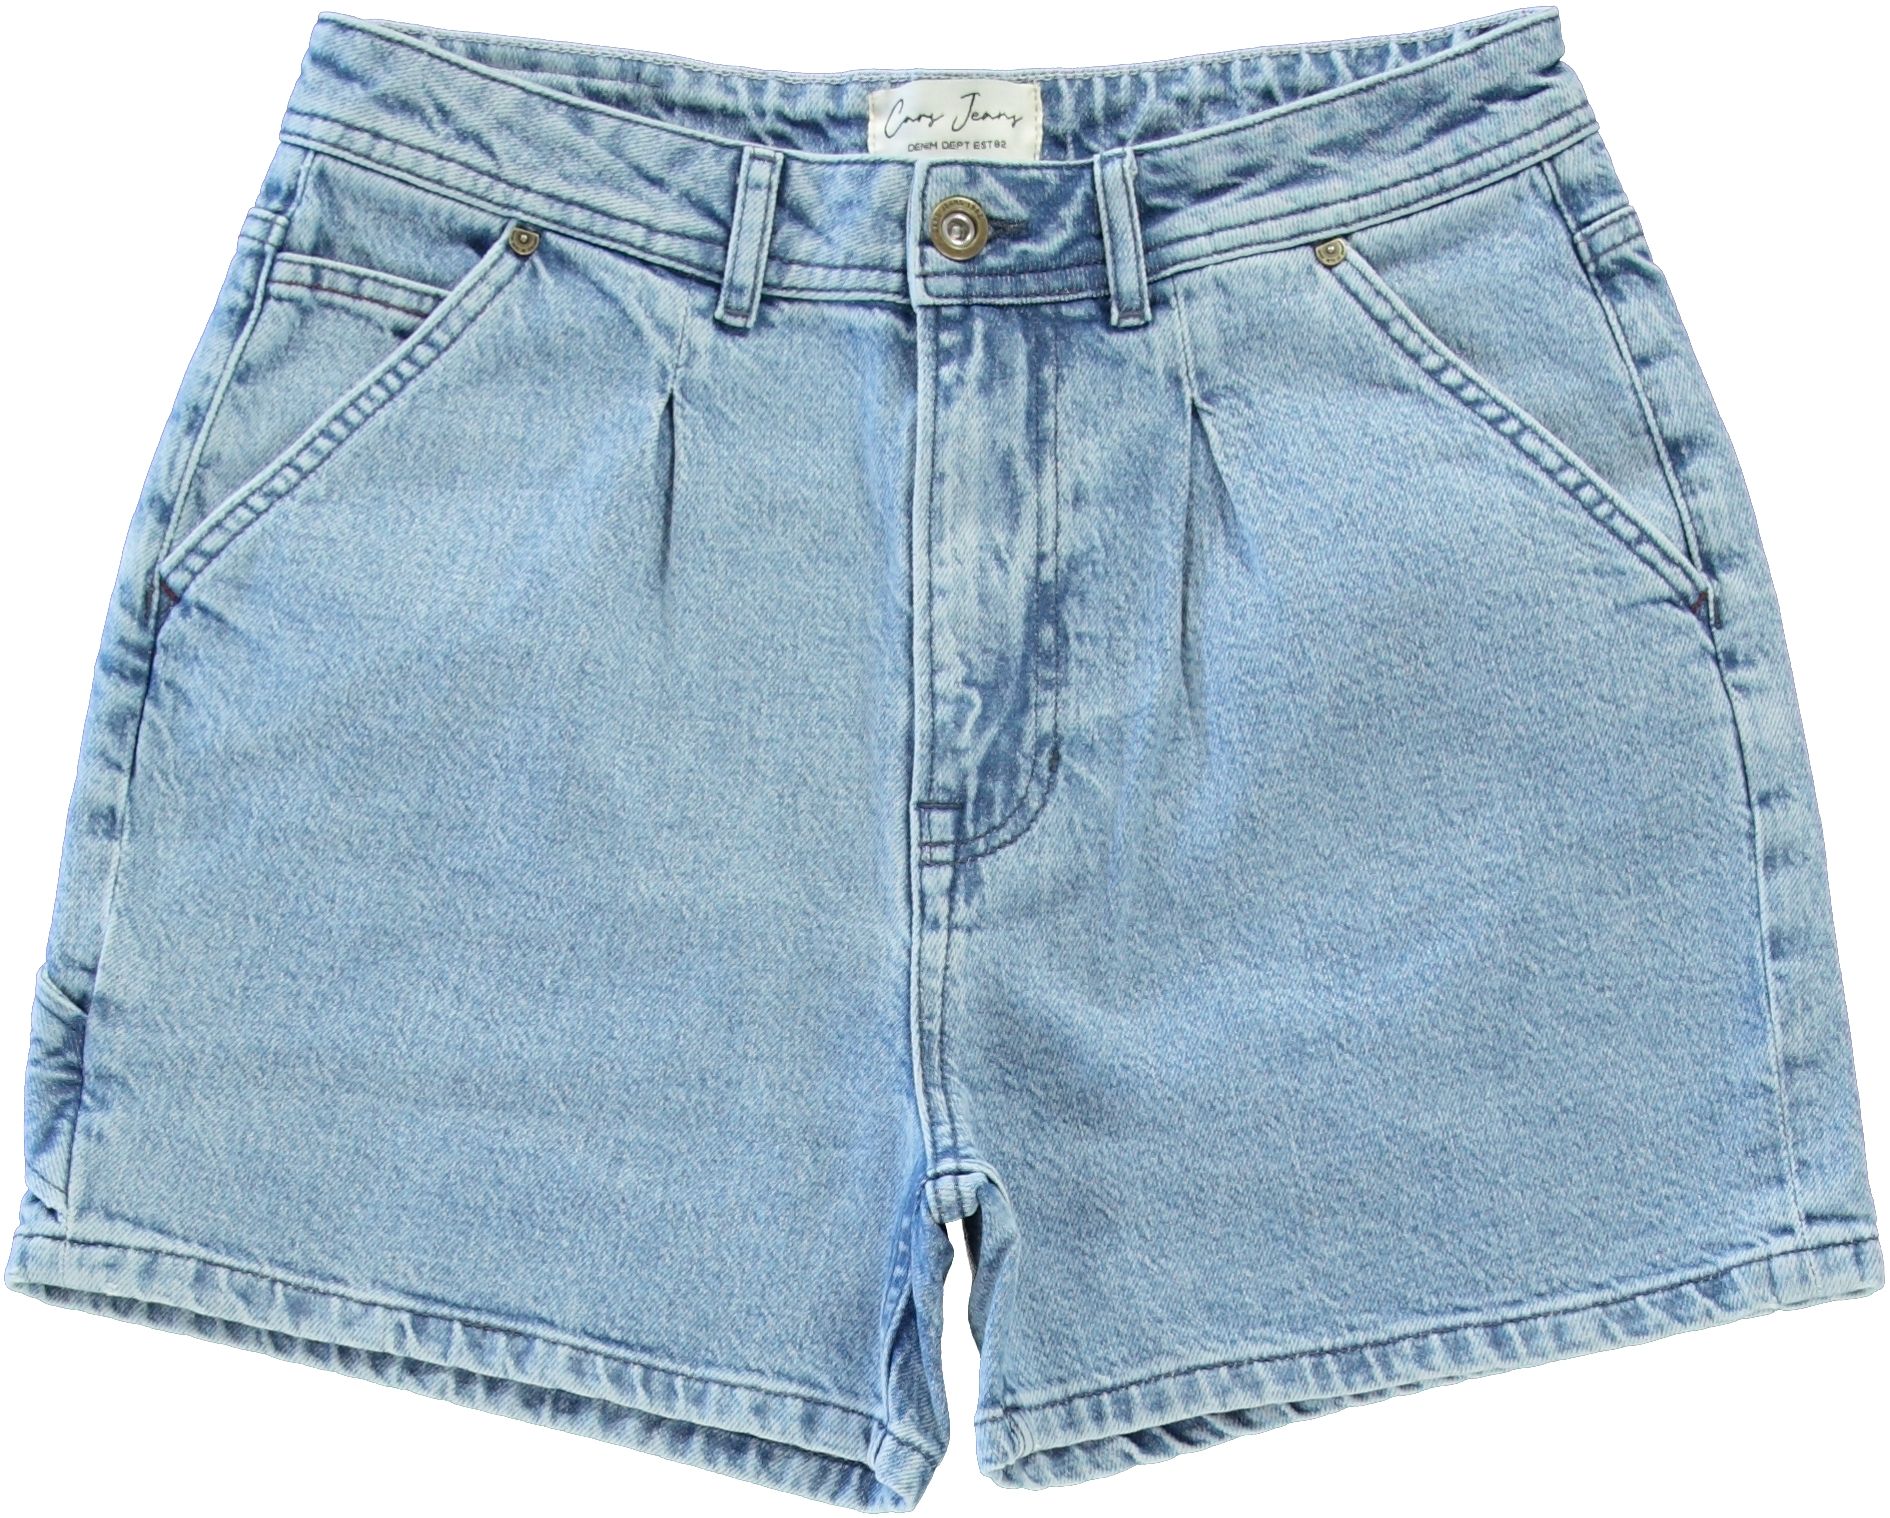 Cars jeans Short Maui Jr. 75 bleached used 00107514-EKA03000200000043